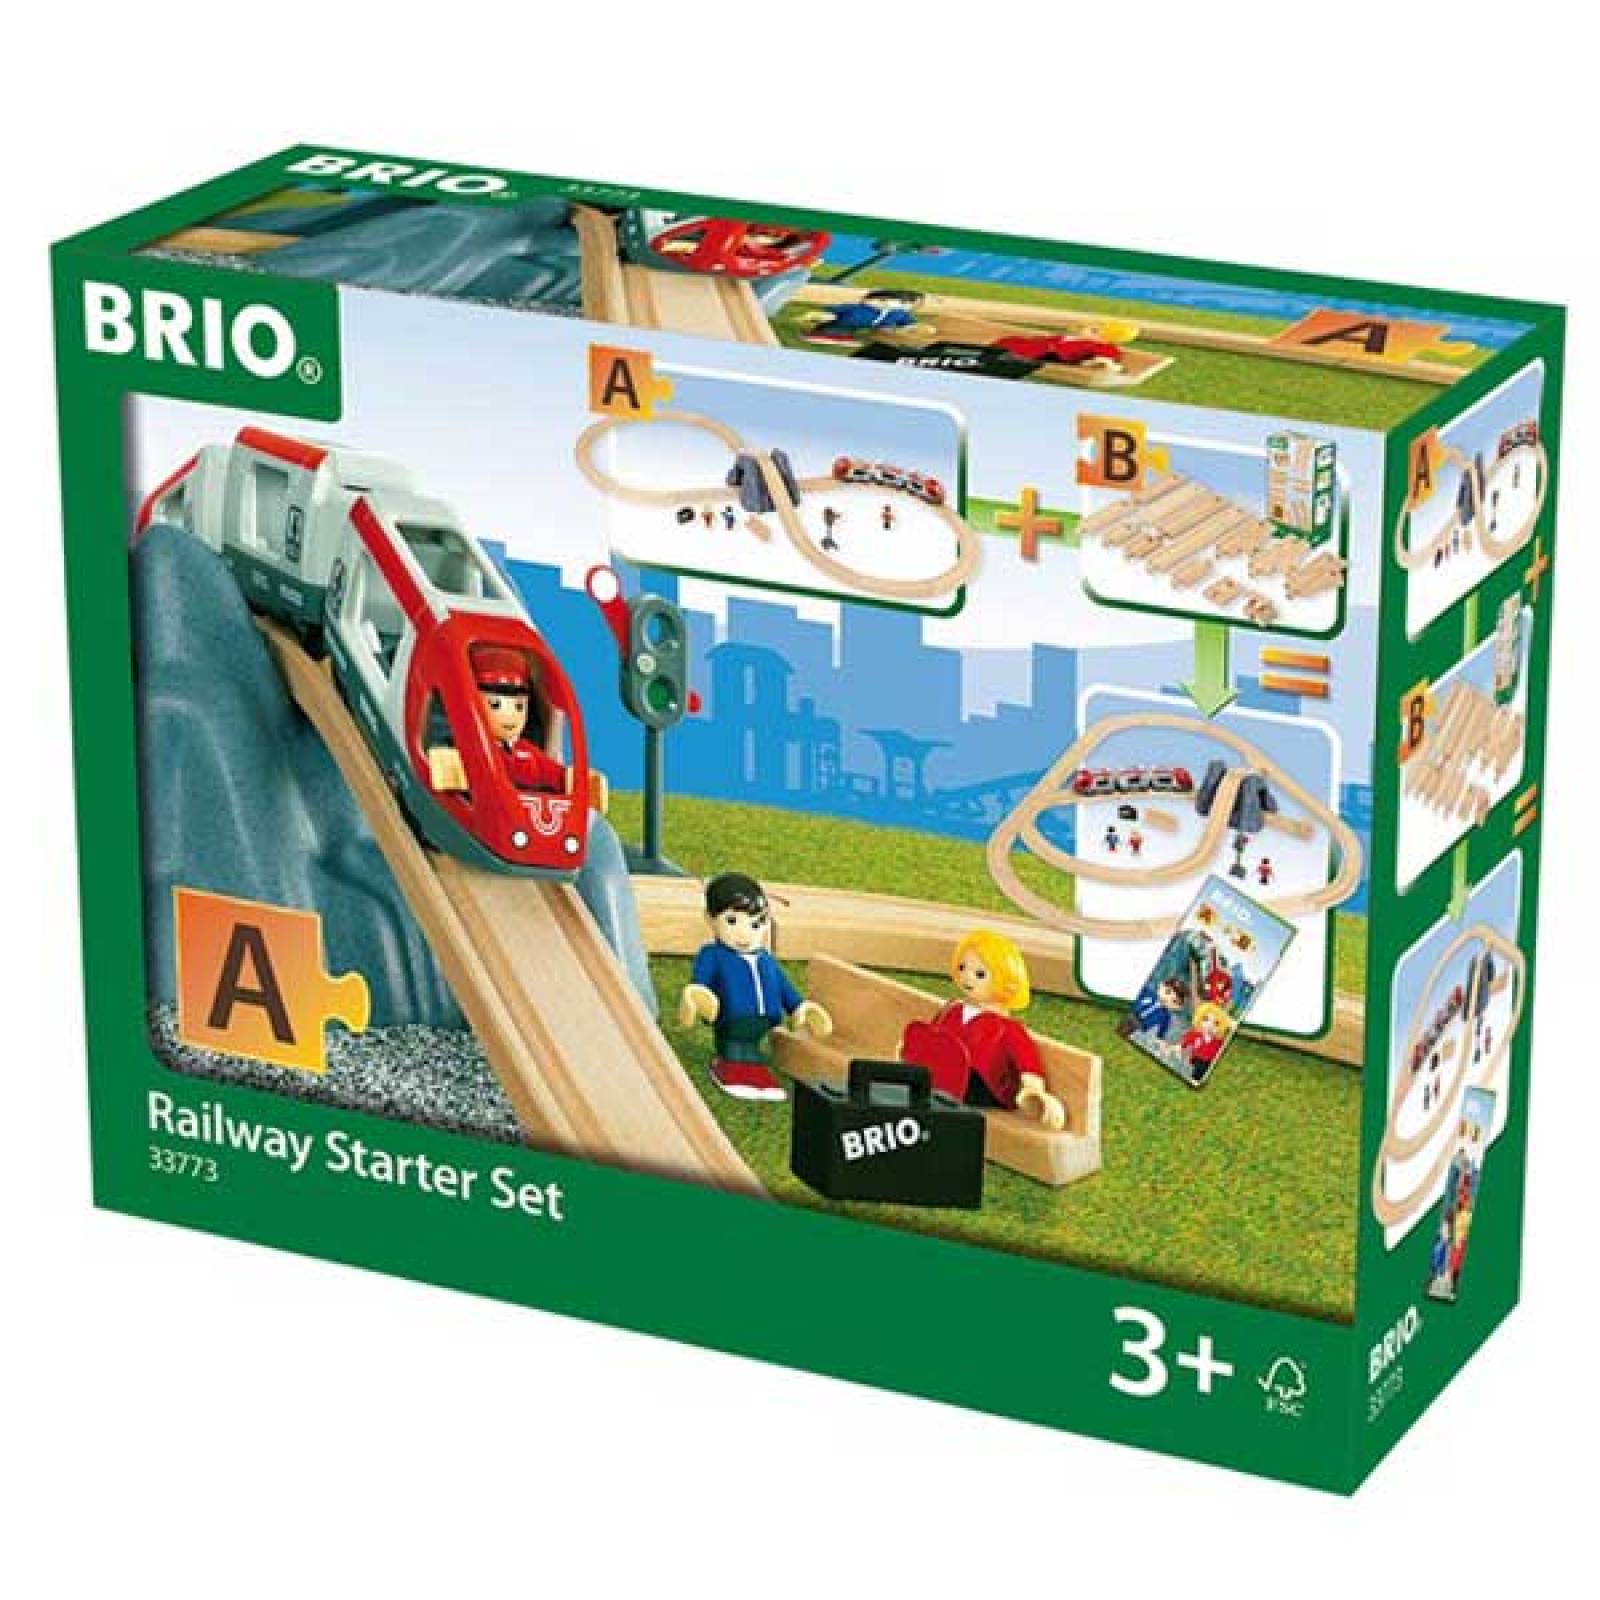 Railway Starter Set "A" BRIO Wooden Railway Age 3+ thumbnails